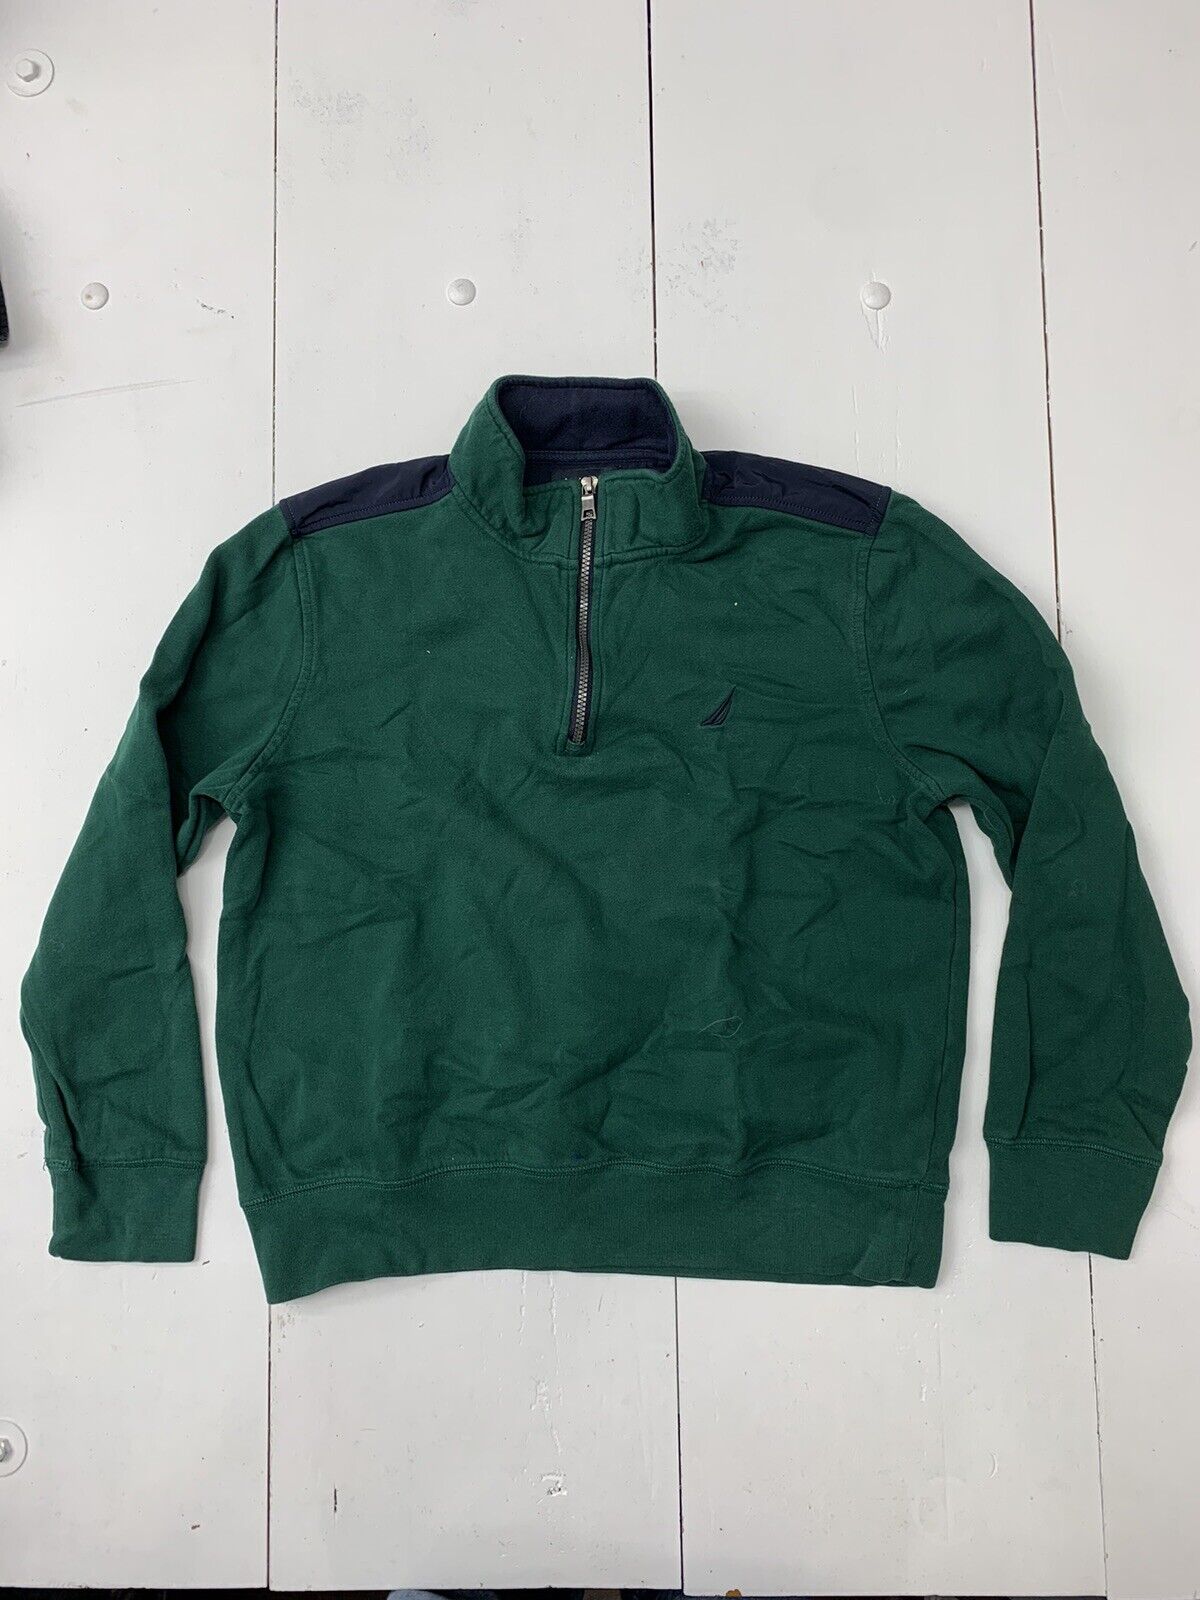 Nautica Womens Green 1/4 Zip Pullover Sweater Size Medium - beyond exchange